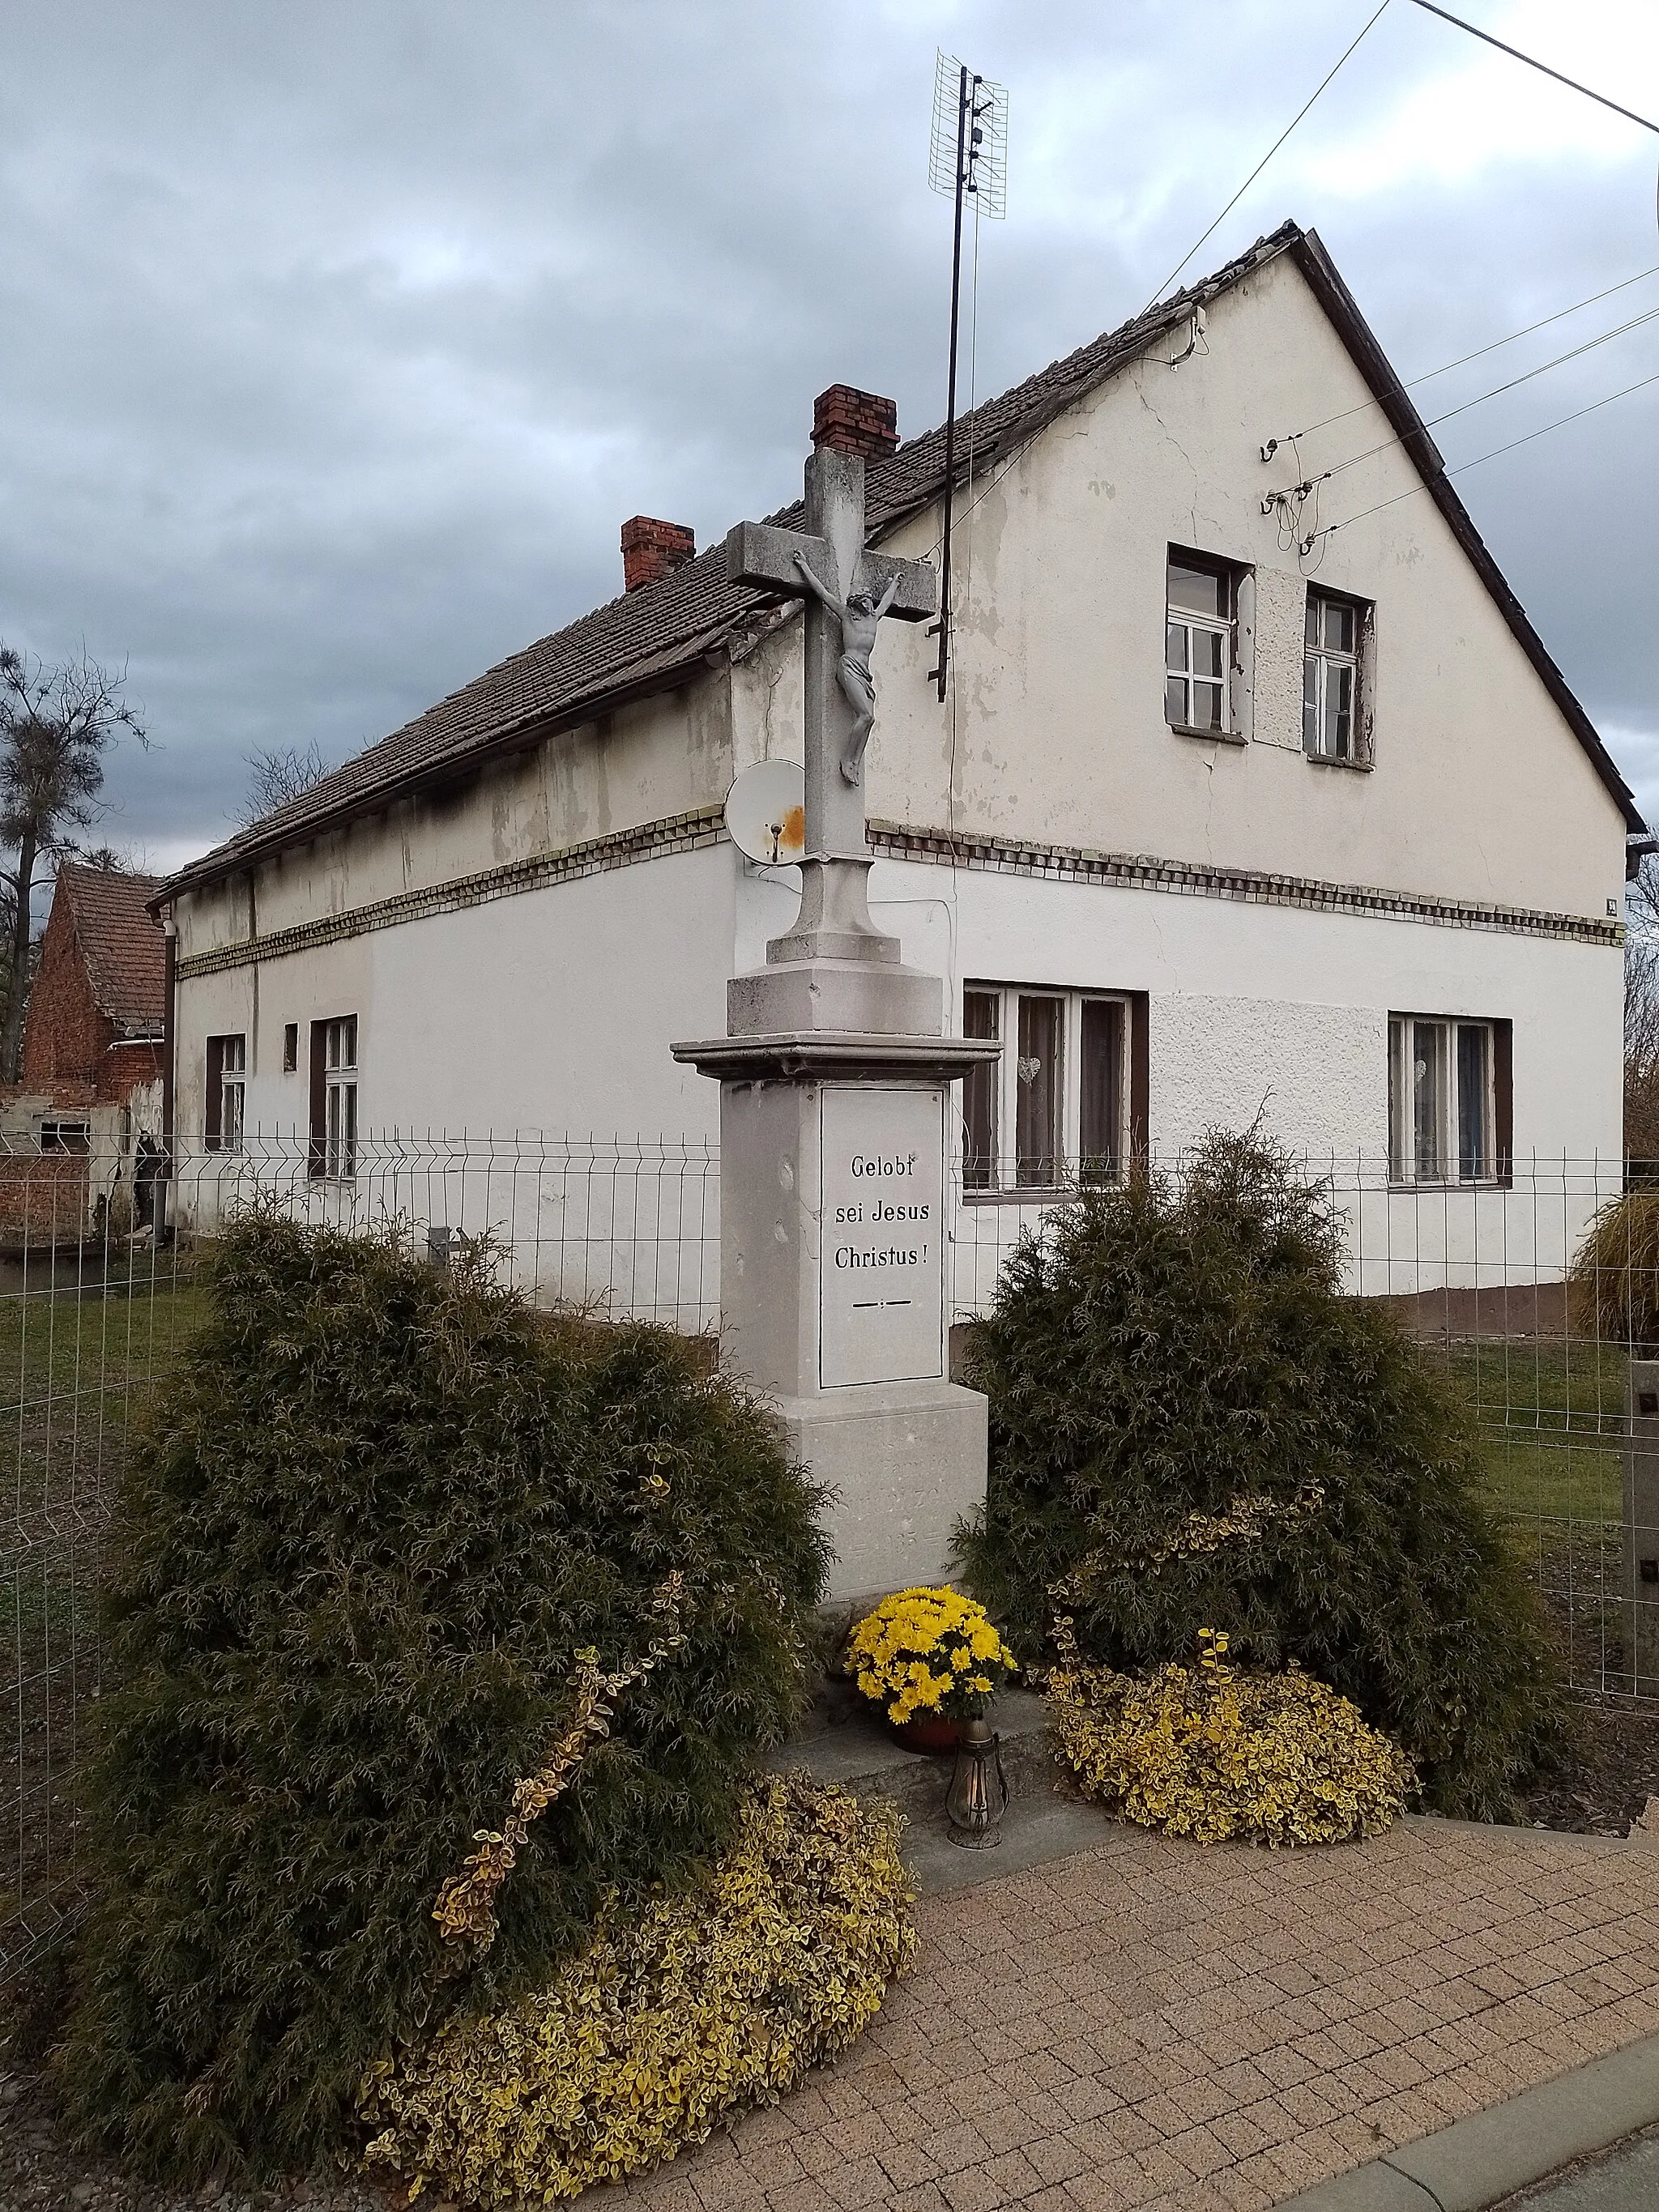 Photo showing: A roadside cross at the house No. 58 on Długa Street in Zabełków, Upper Silesia, Poland